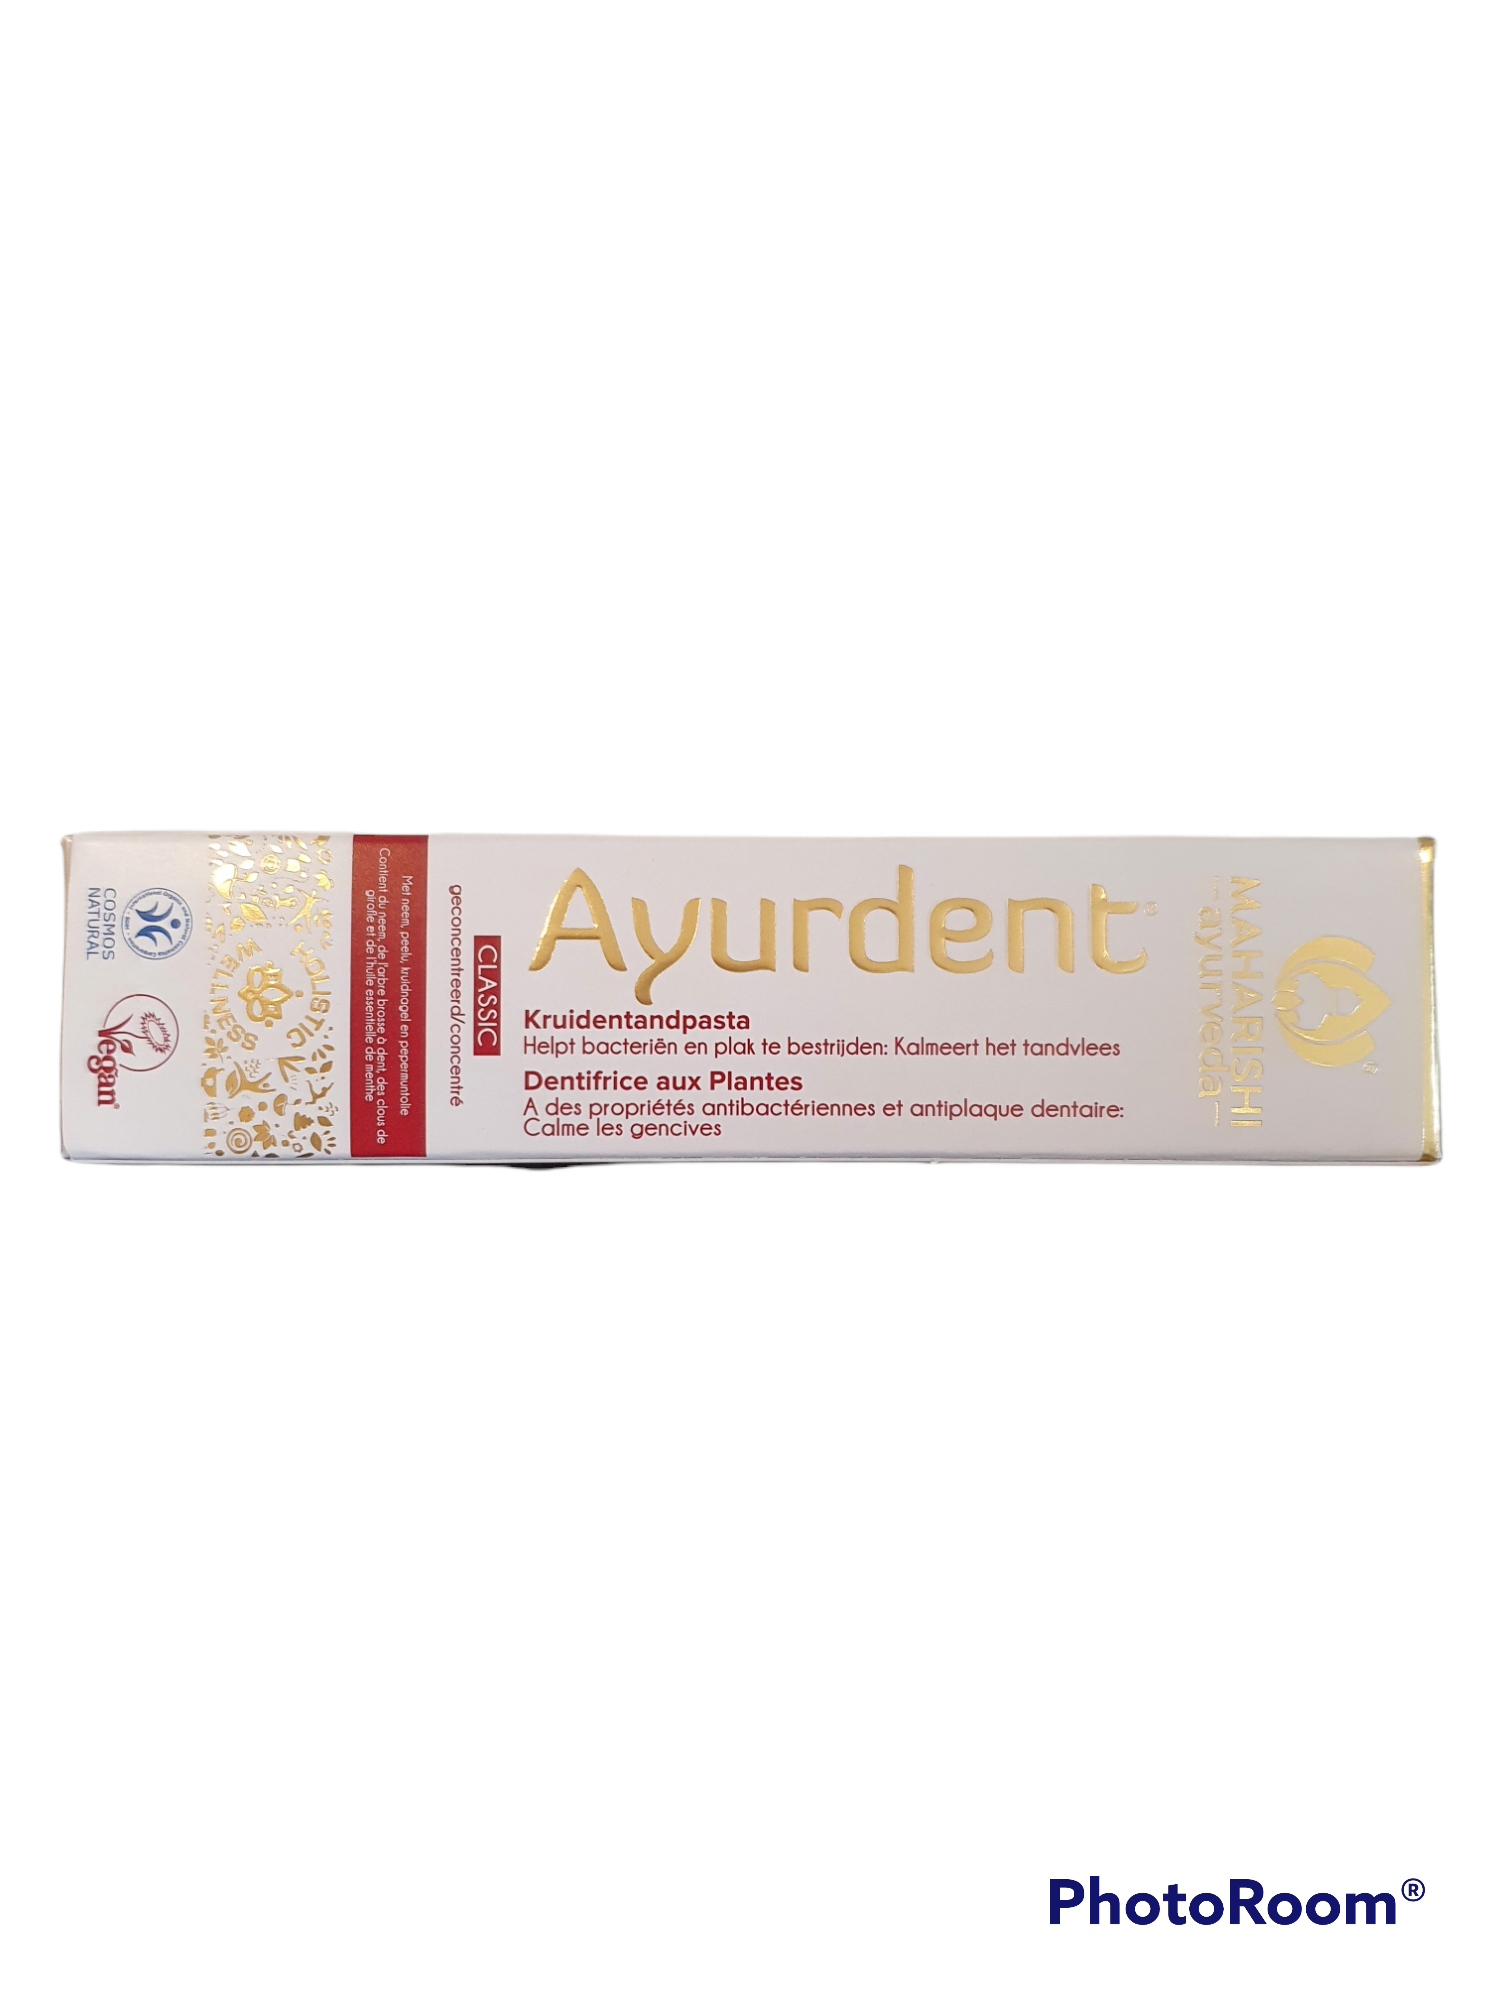 Ayurdent-Classic-örttandkräm, 75ml